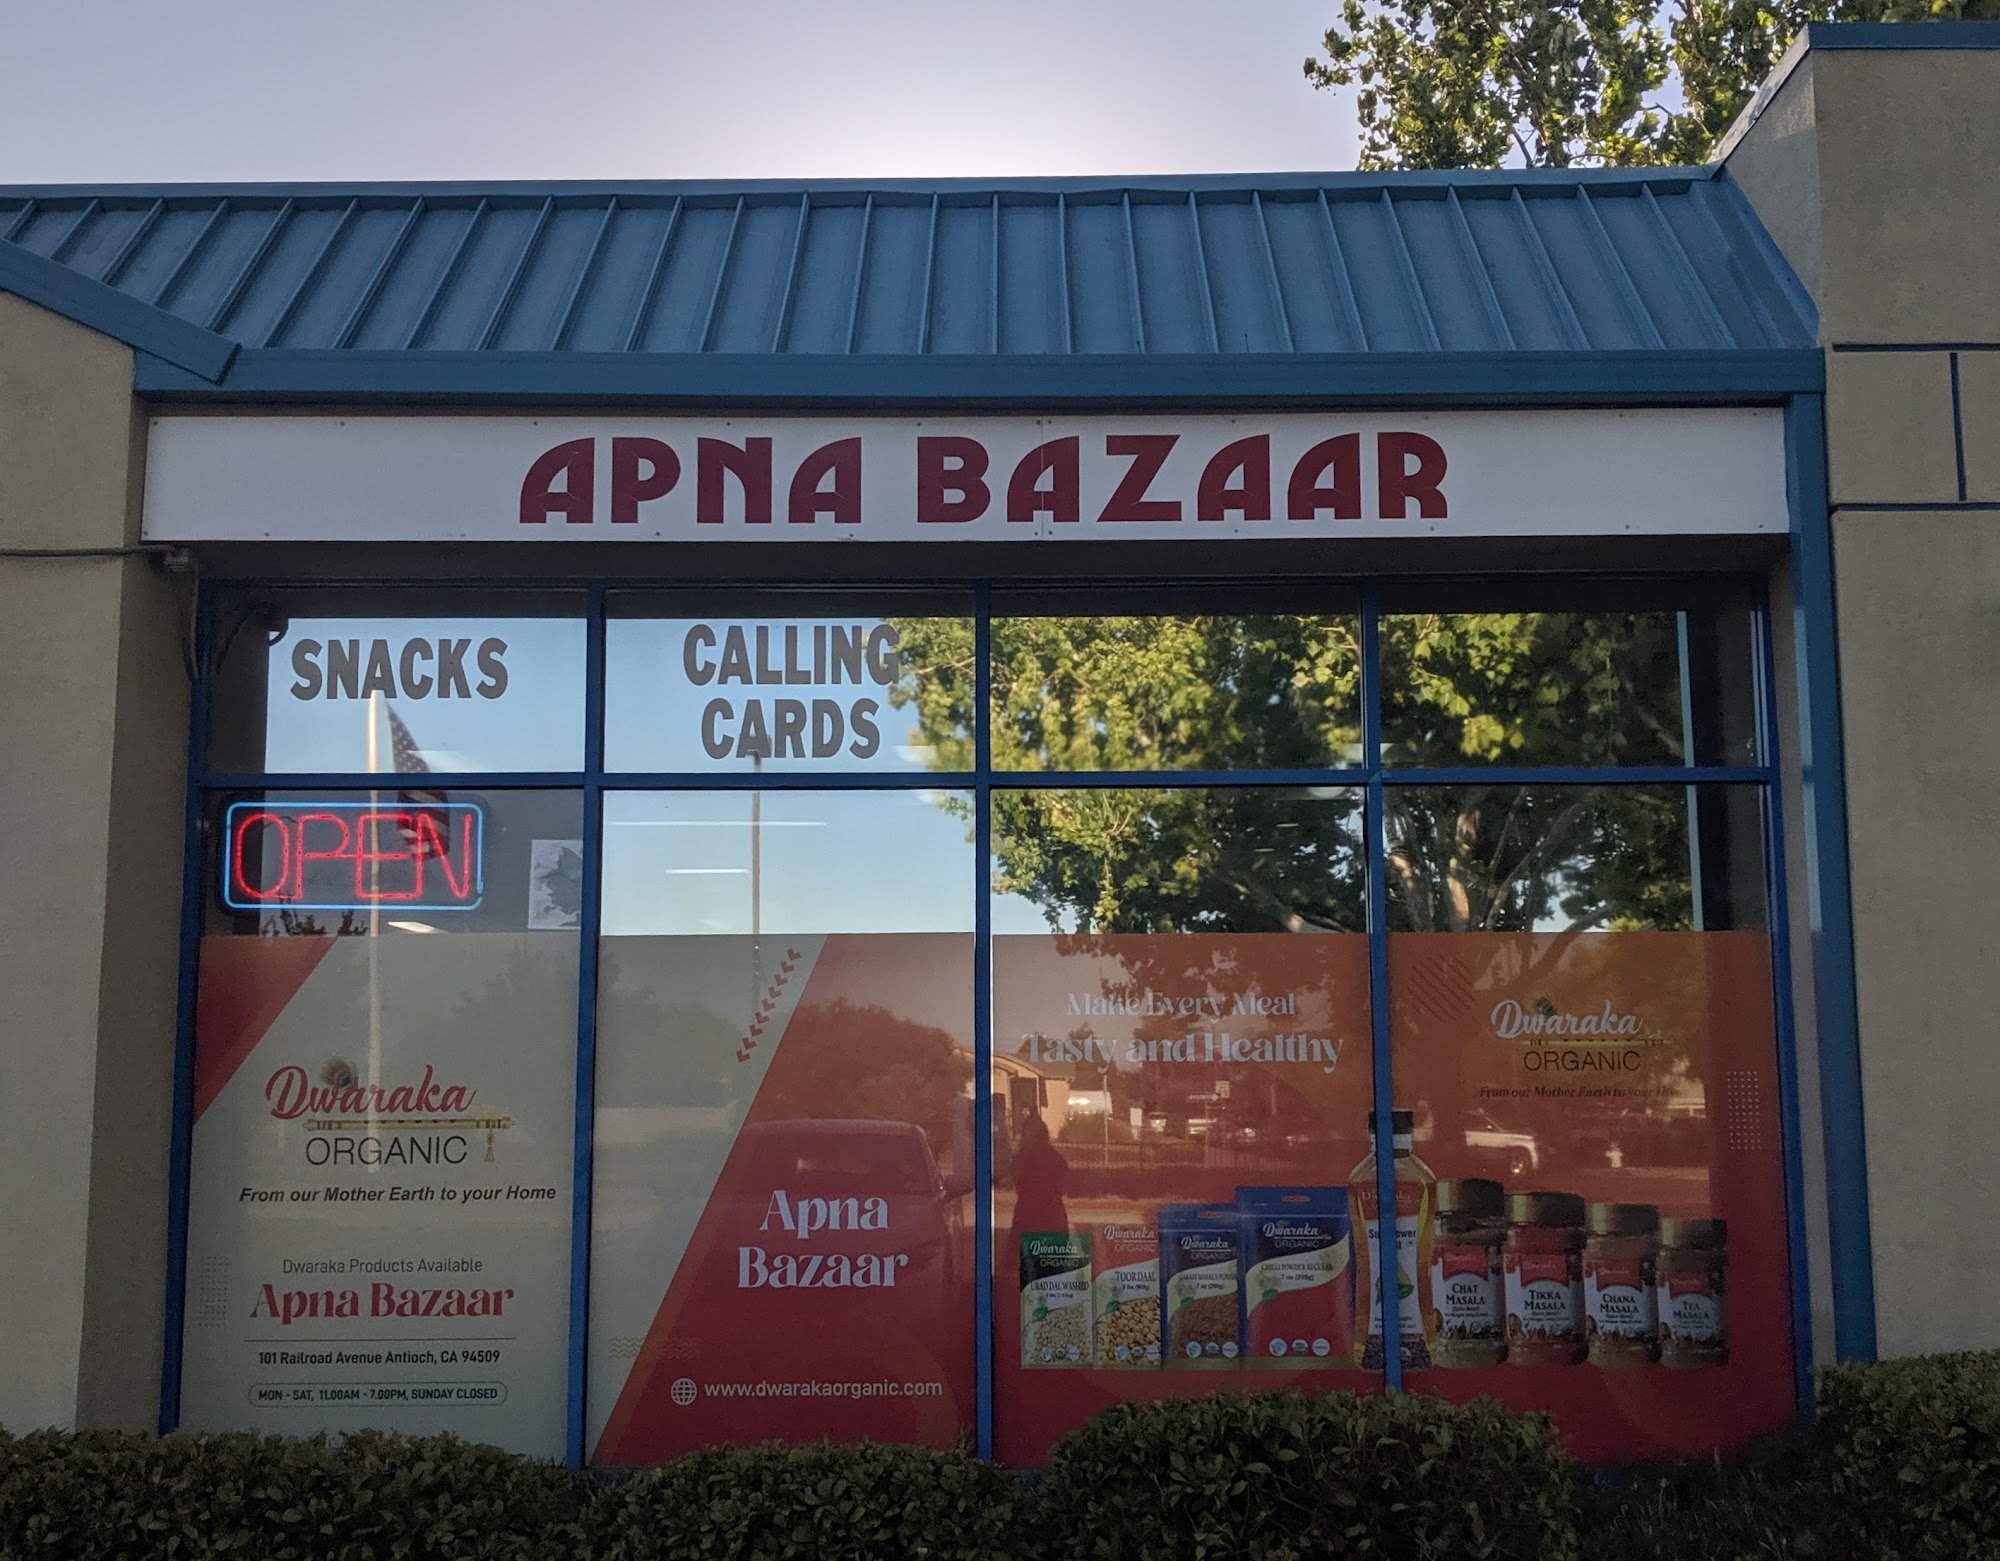 A's Mini Market & More and Apna Bazaar